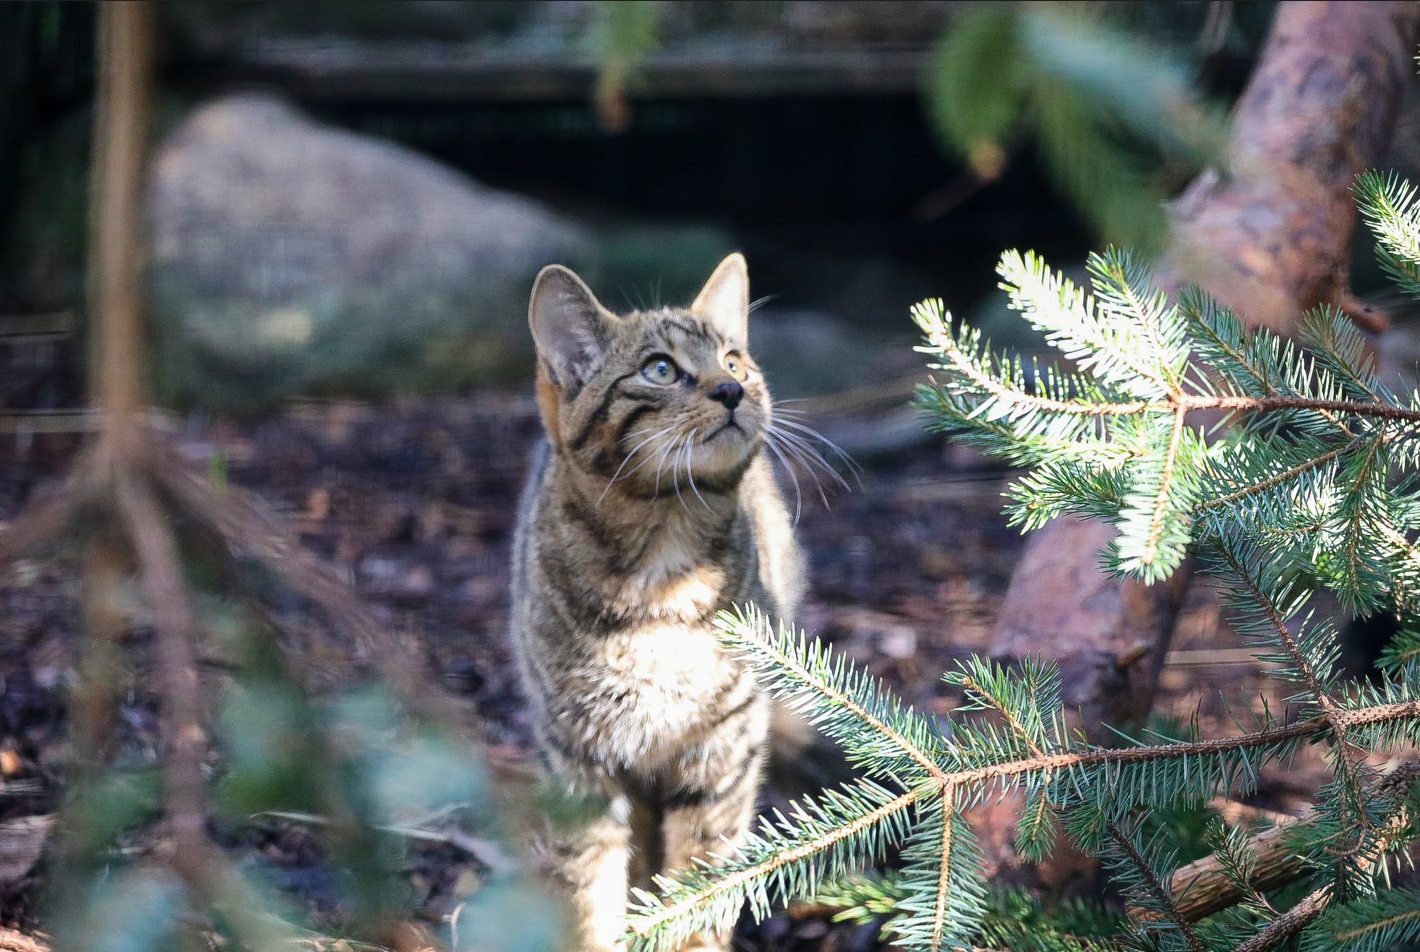 Young wildcat in enclosure at Highland Wildlife Park looking up

Image: ALLIE MCGREGOR 2023